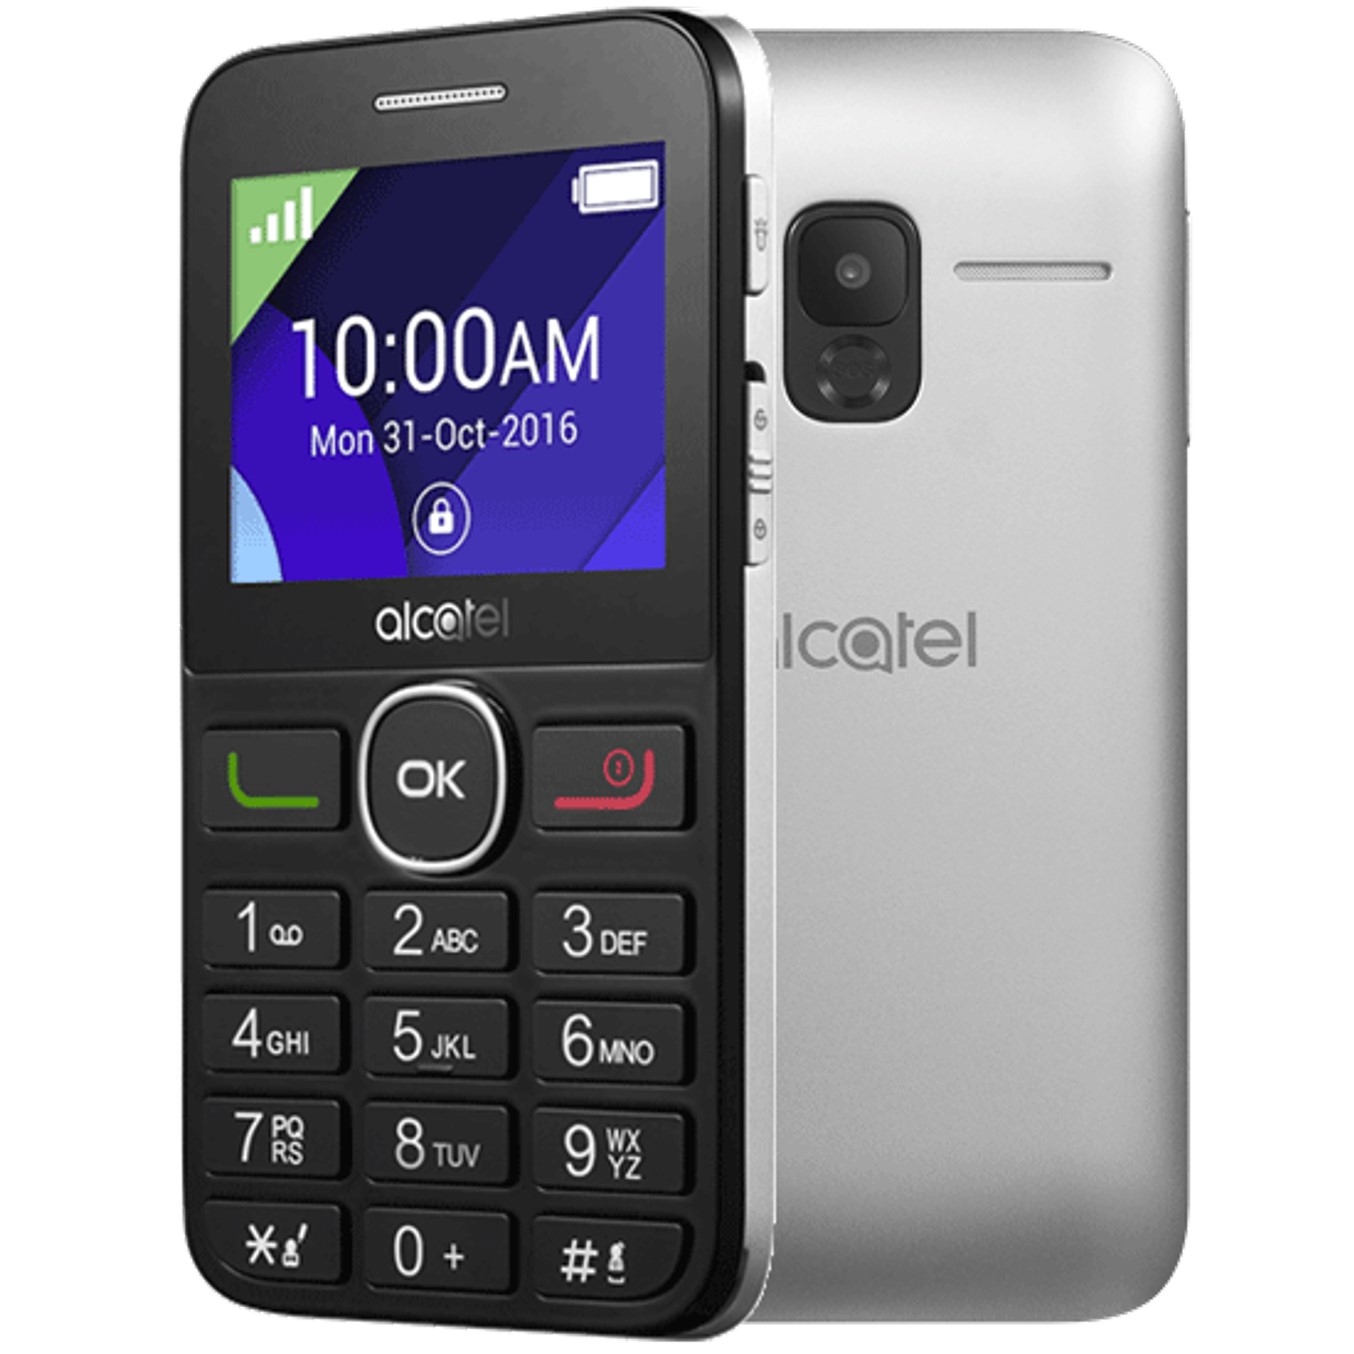 Telefono movil alcatel 2008 plata - 2.4pulgadas - 16mb rom - 8mb ram - single sim